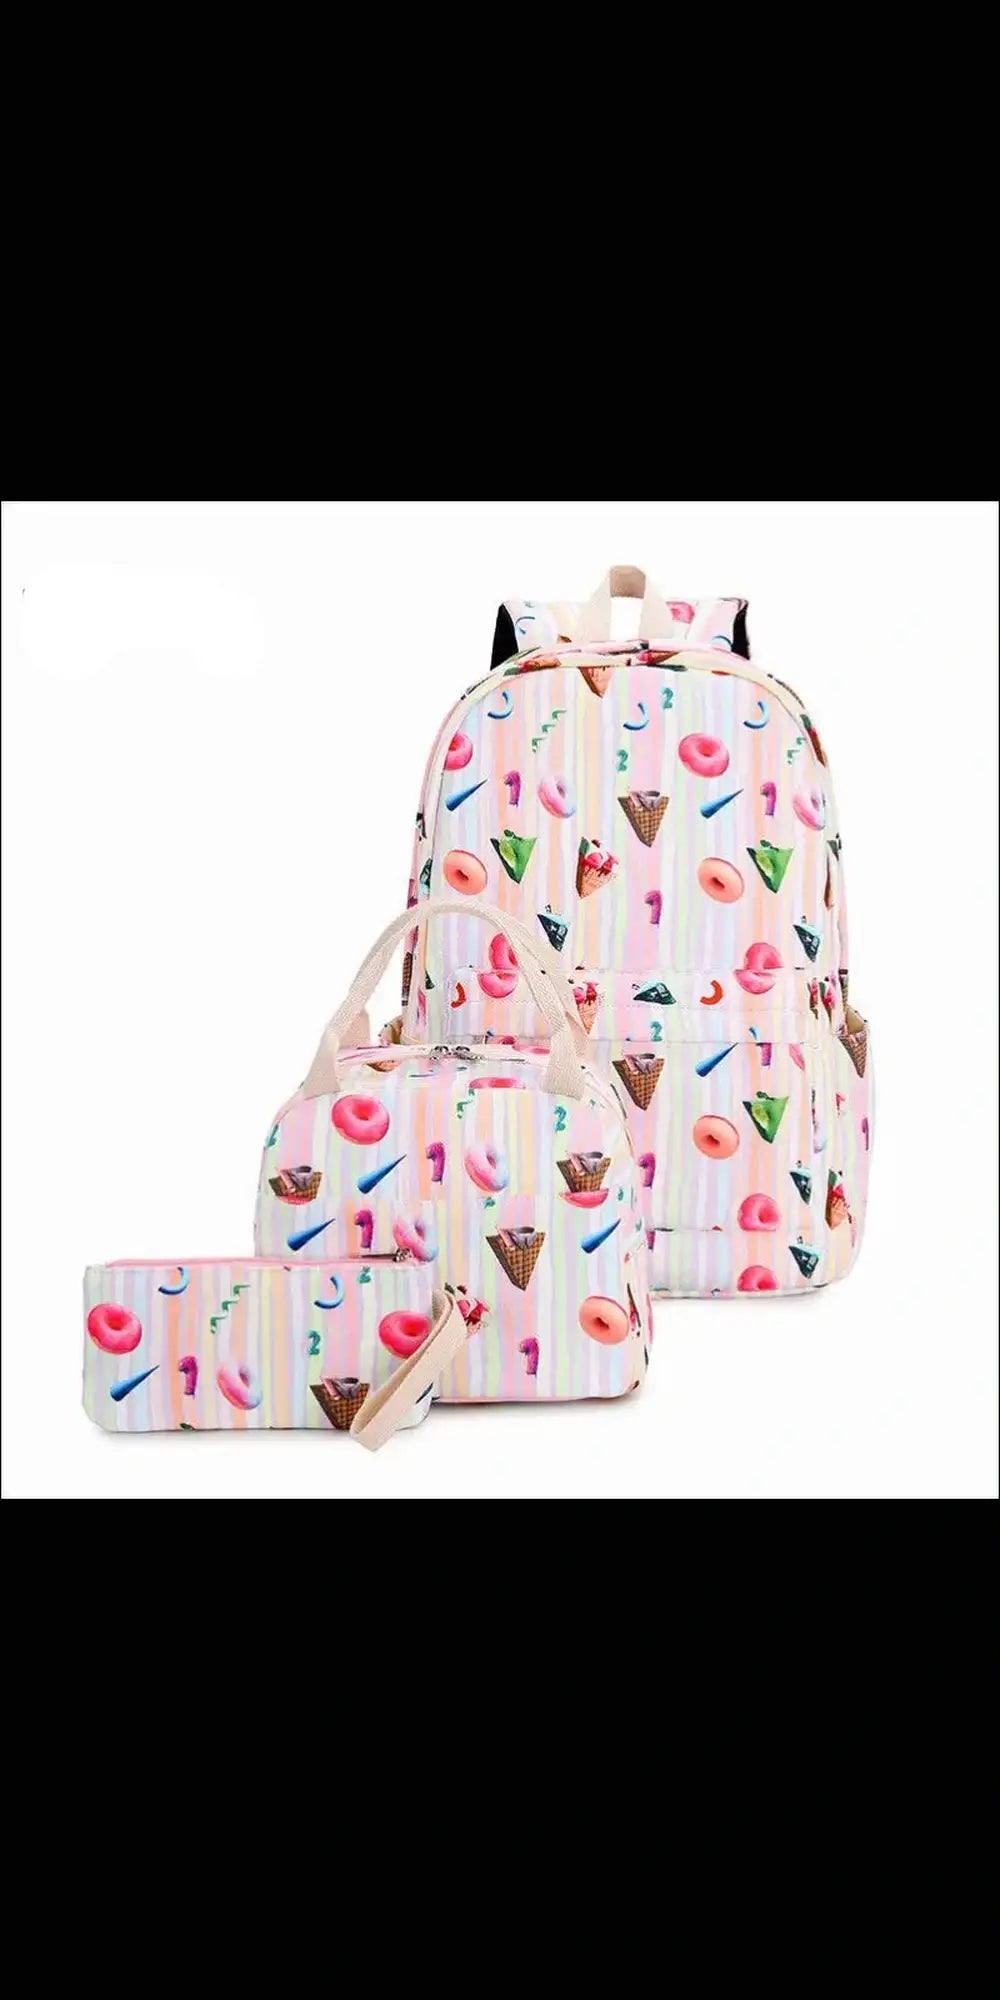 Three - piece backpack girl rainbow - bags